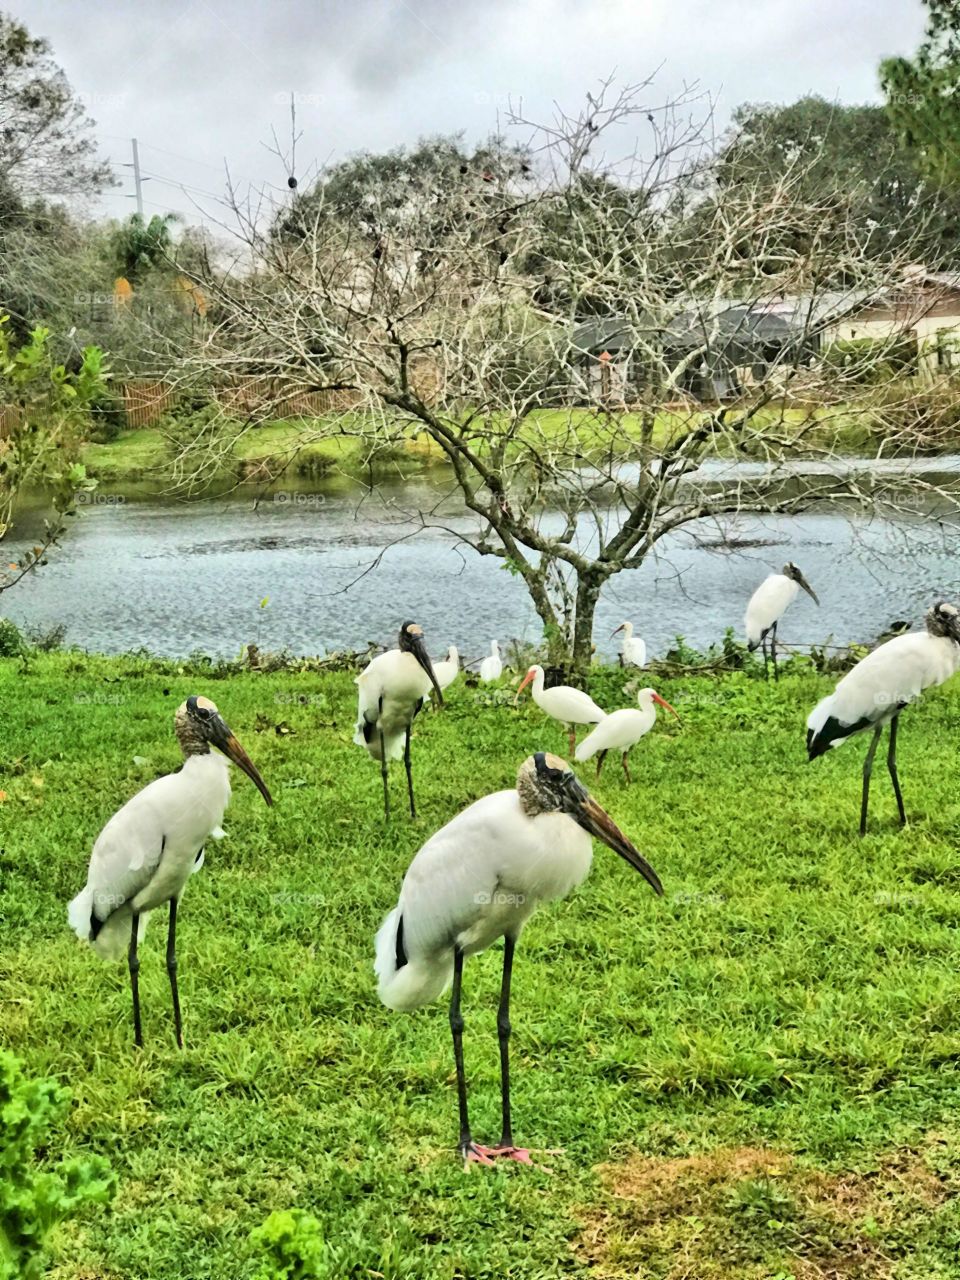 Wood storks and ibises. 